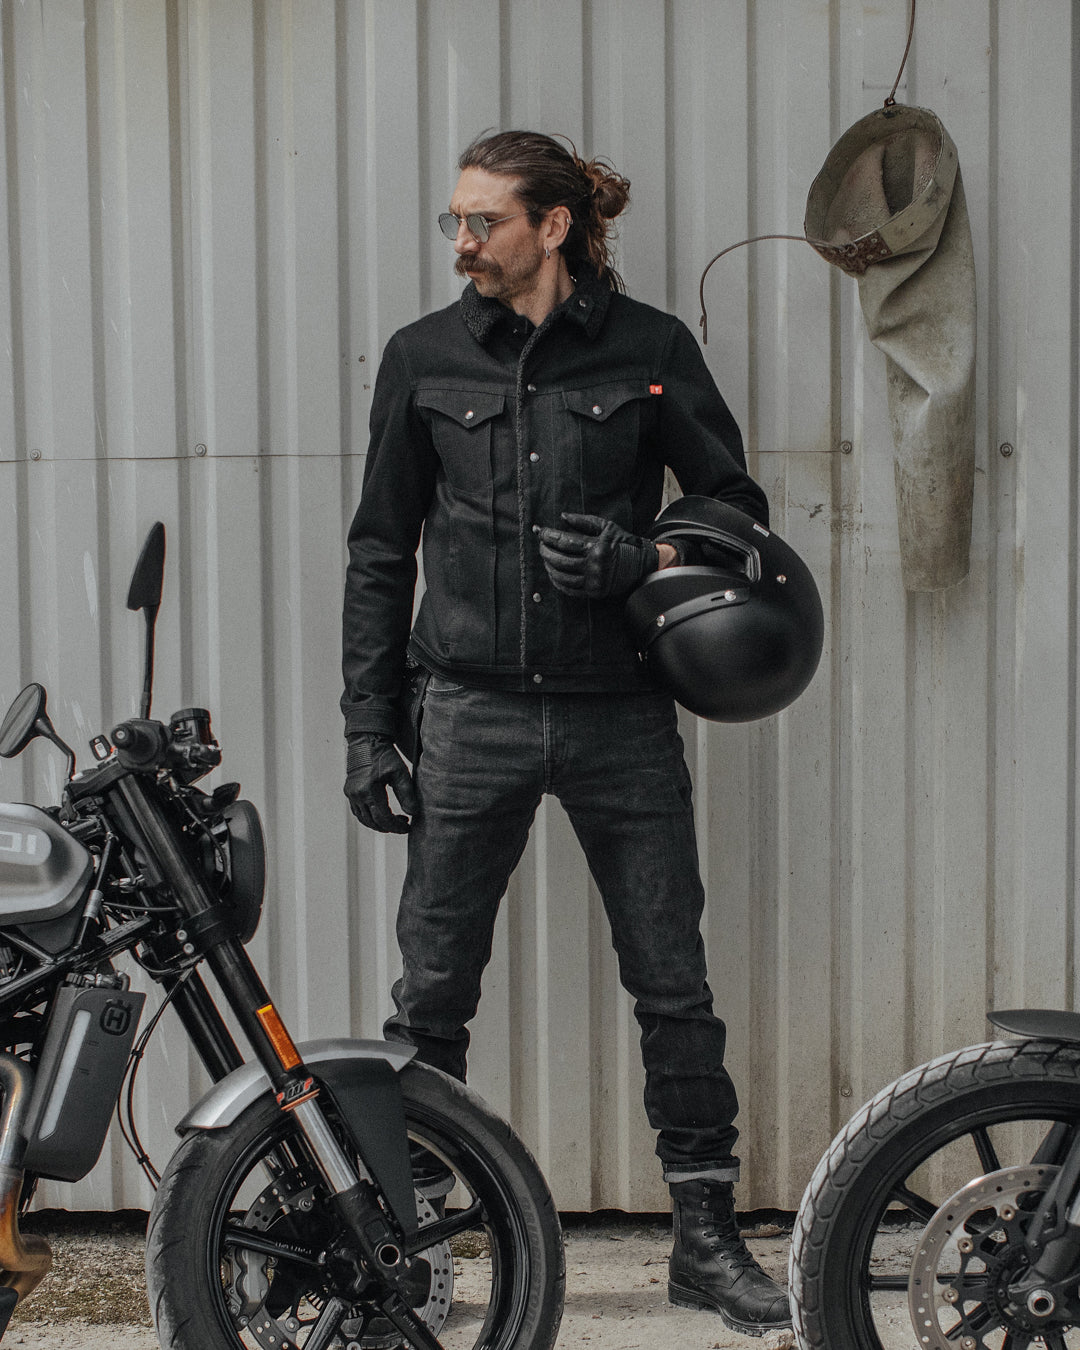 AA Rated denim motorcycle jacket by Pando Moto